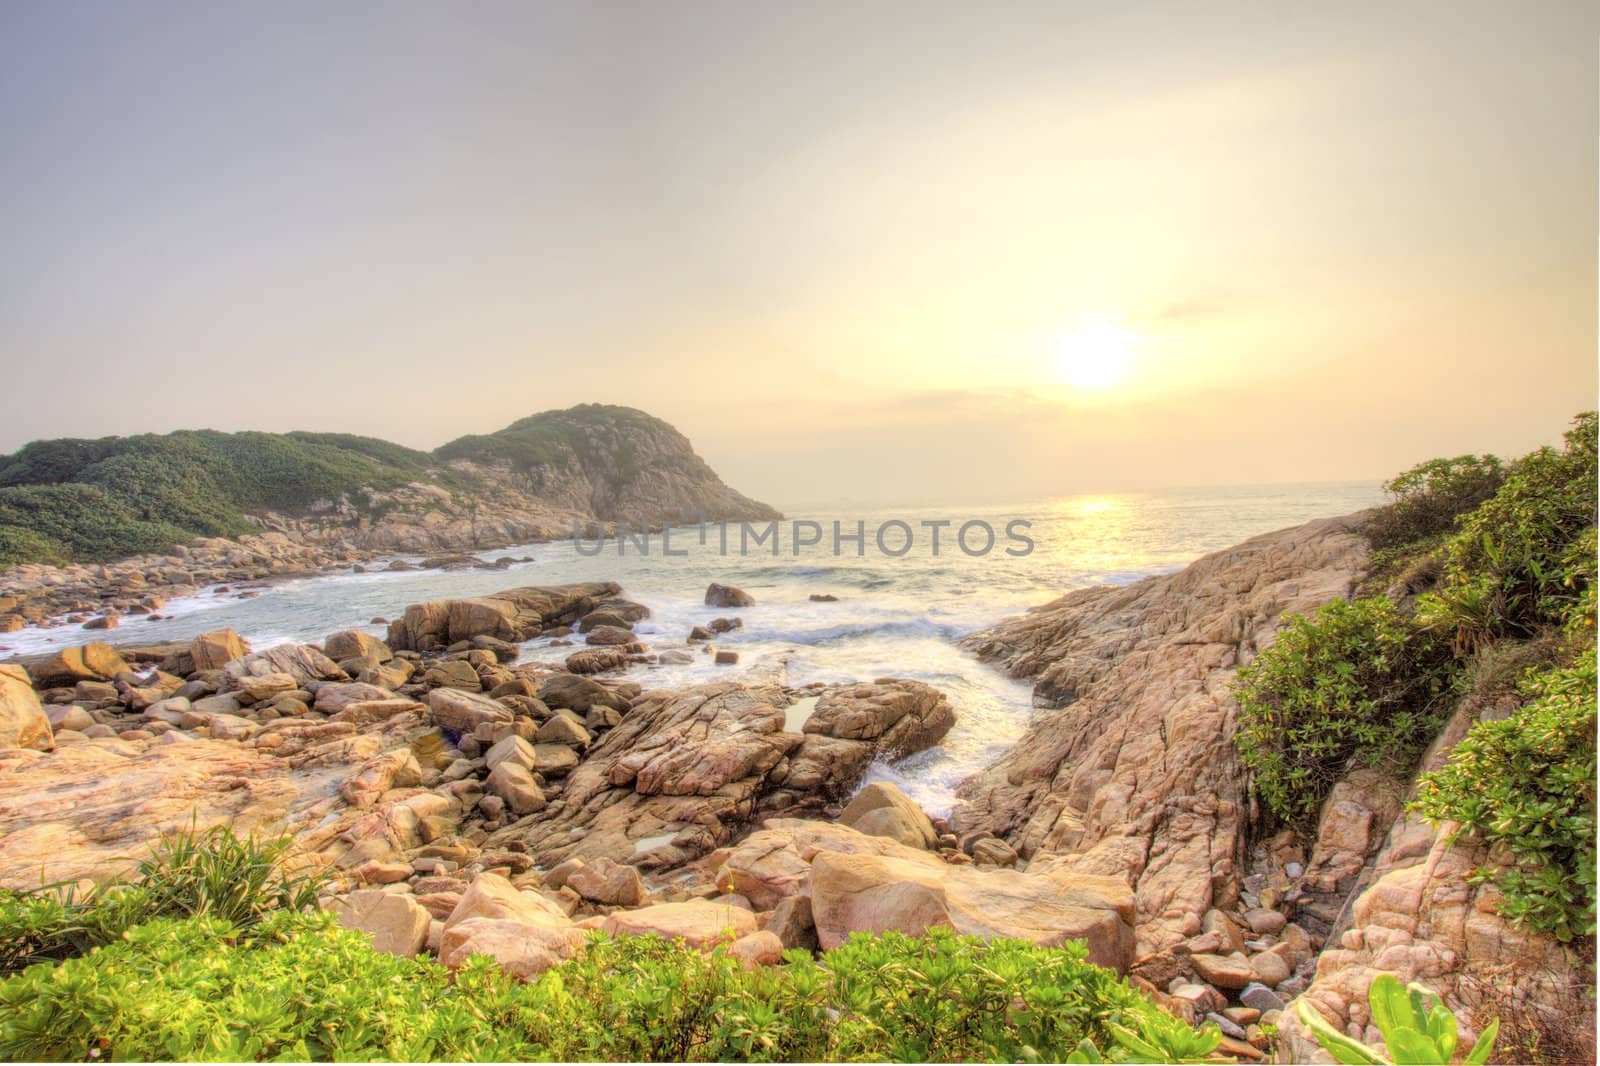 Sea stones along the coast at sunrise by kawing921